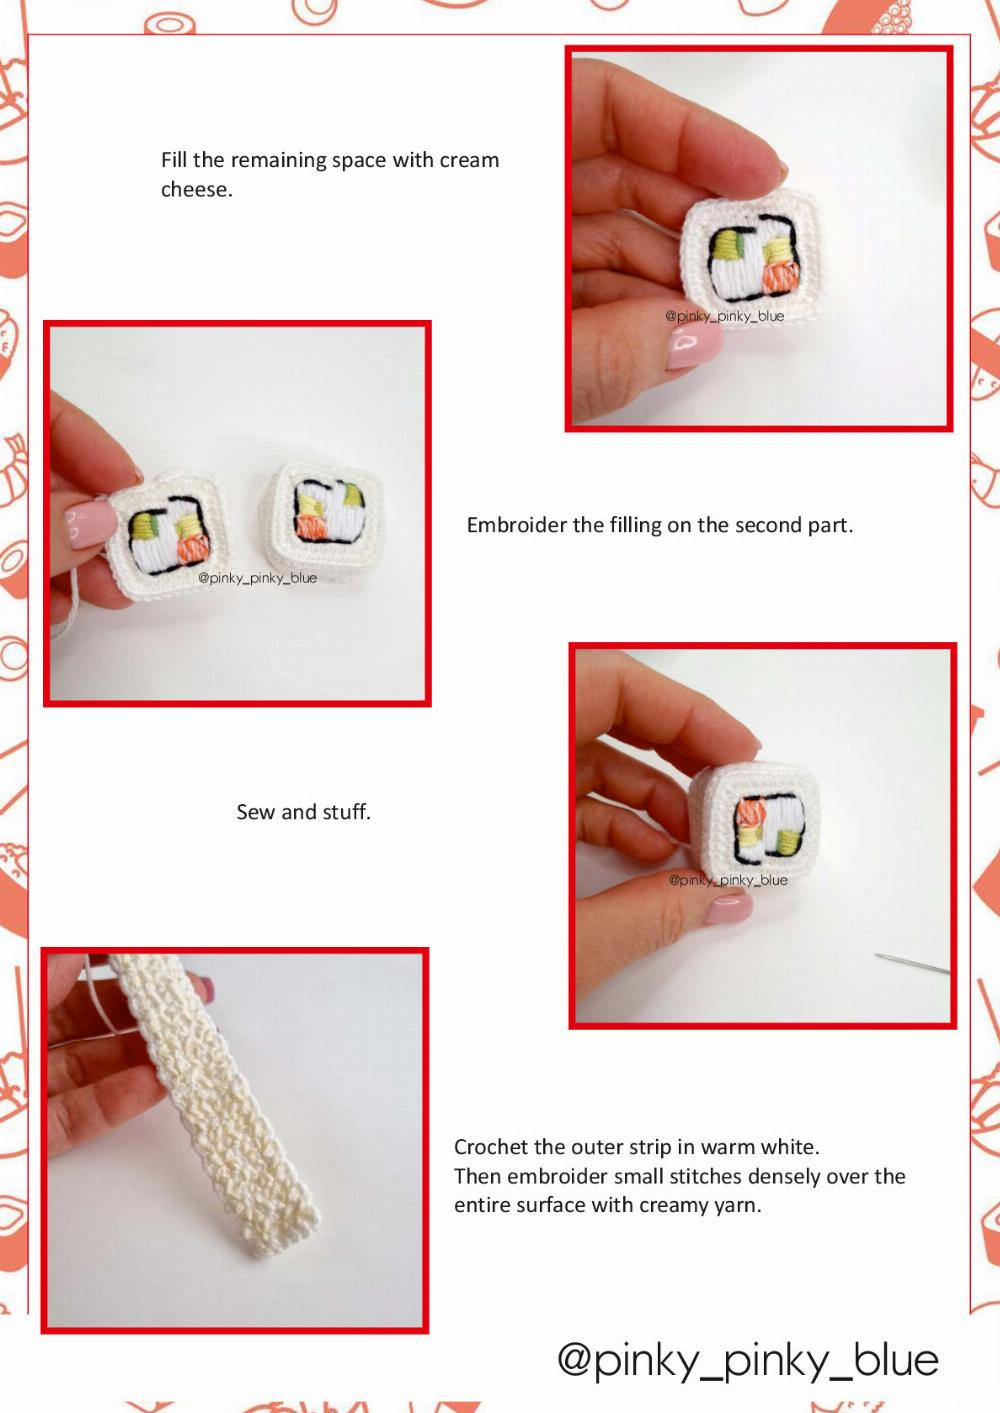 crochet pattern sushi set